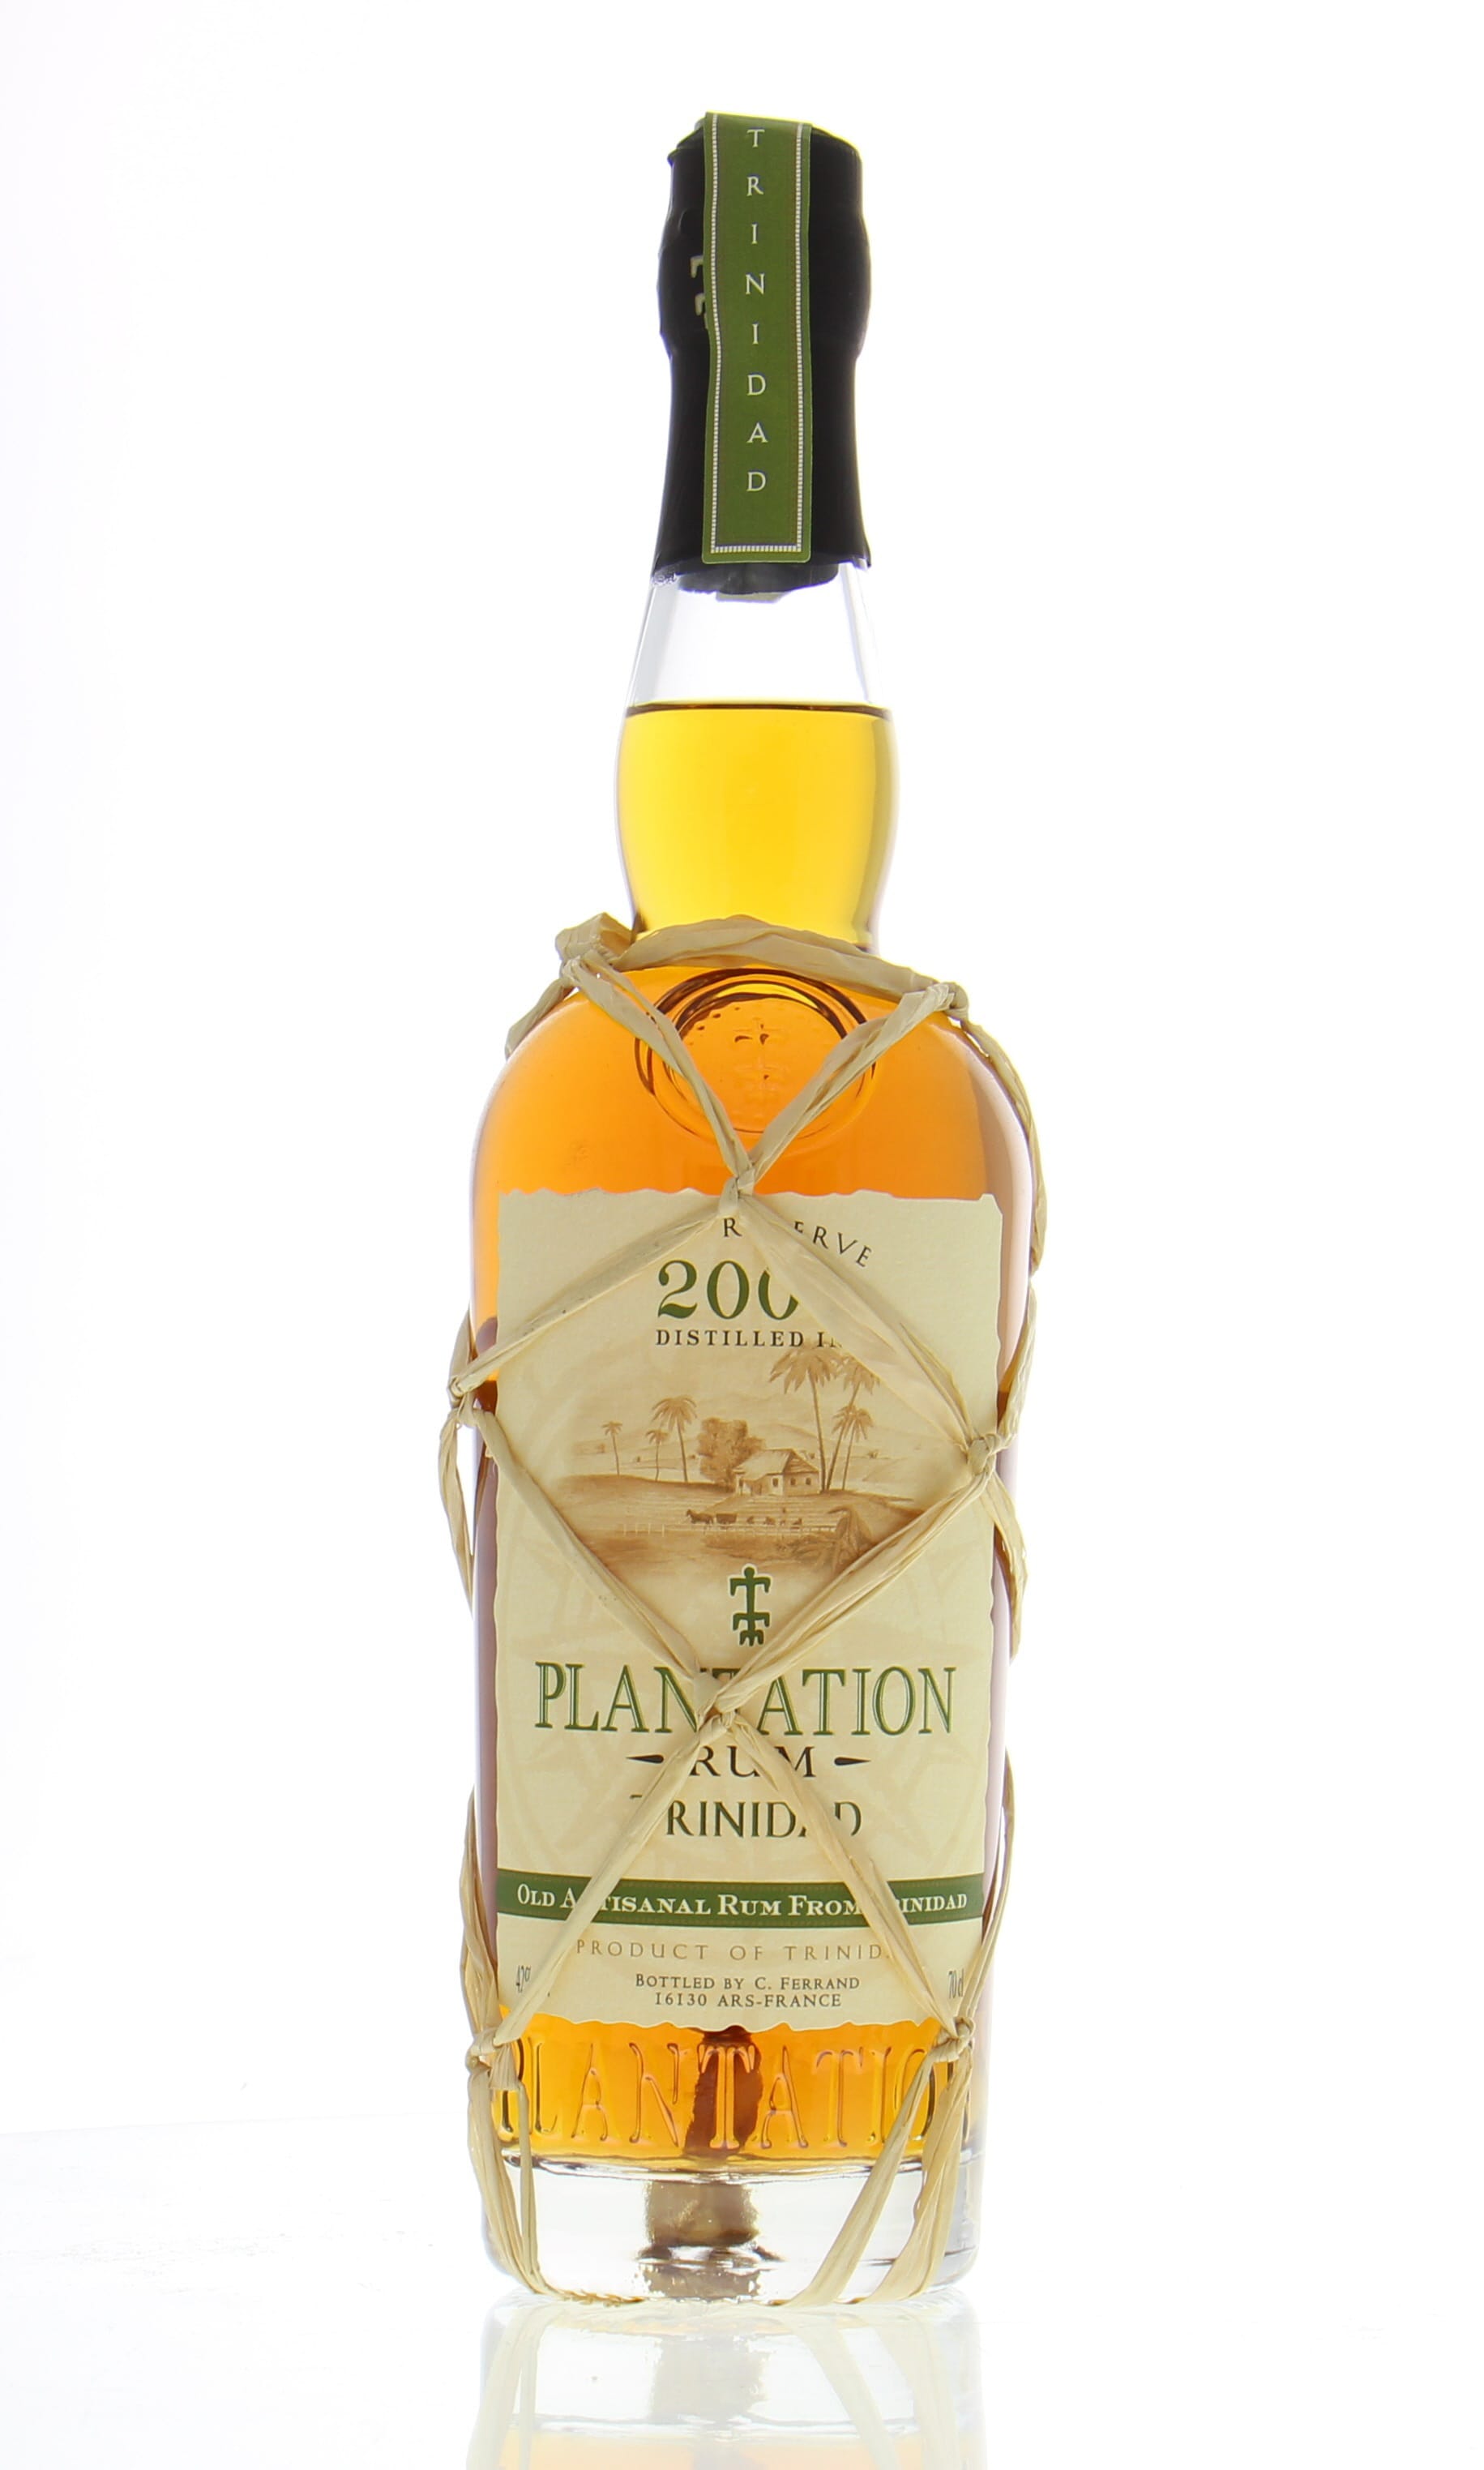 Plantation Rum - Trinidad old reserve 2001 42% 2001